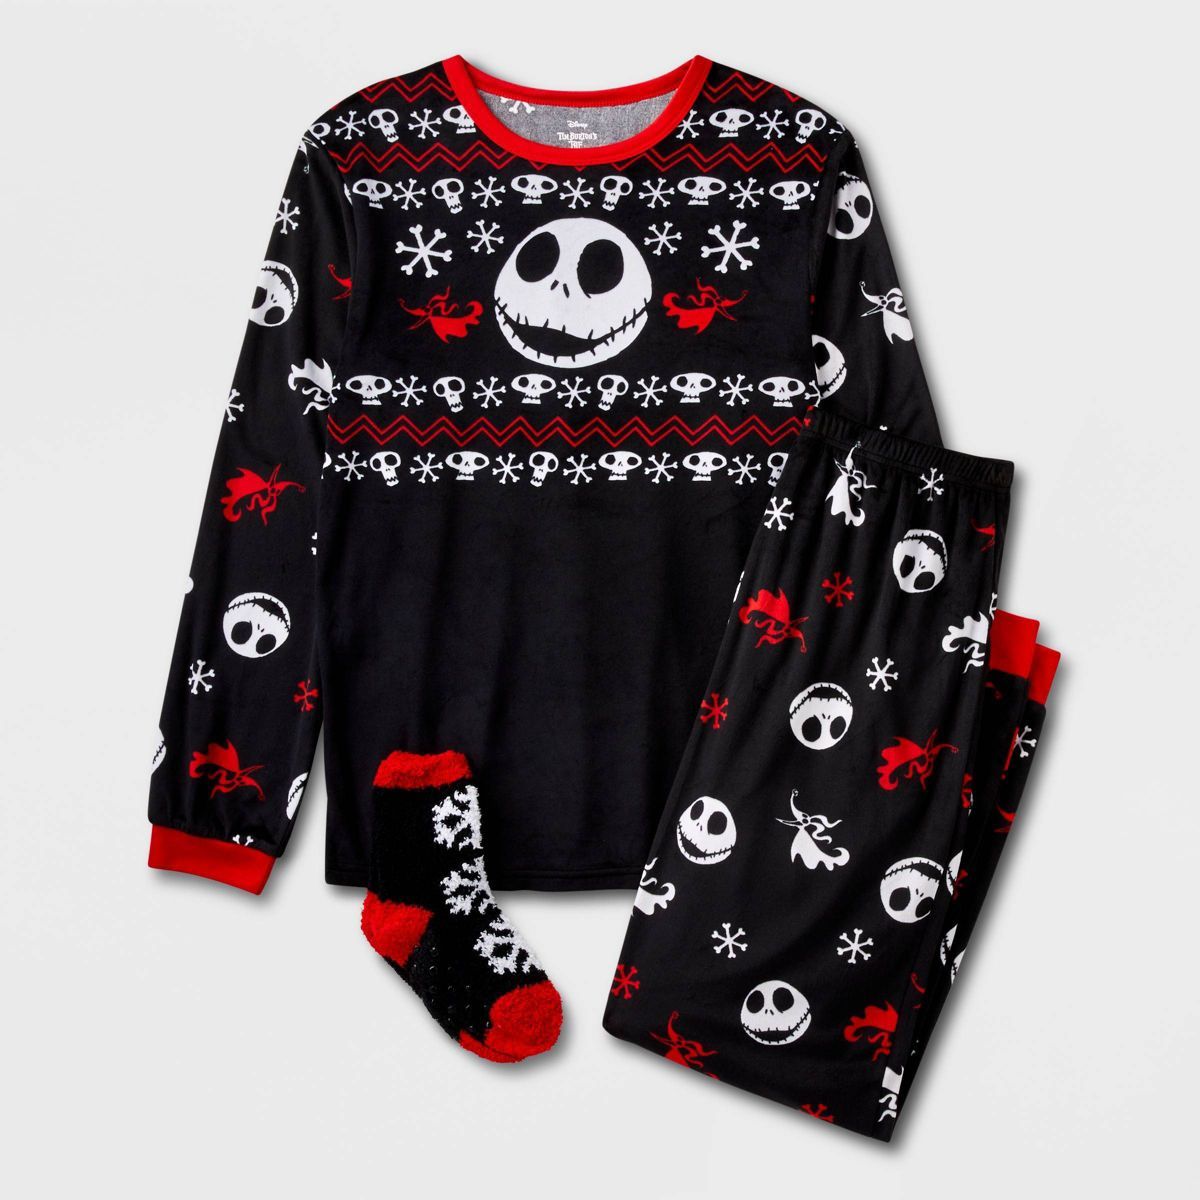 Boys' The Nightmare Before Christmas 2pc Pajama Set with Socks - Black | Target